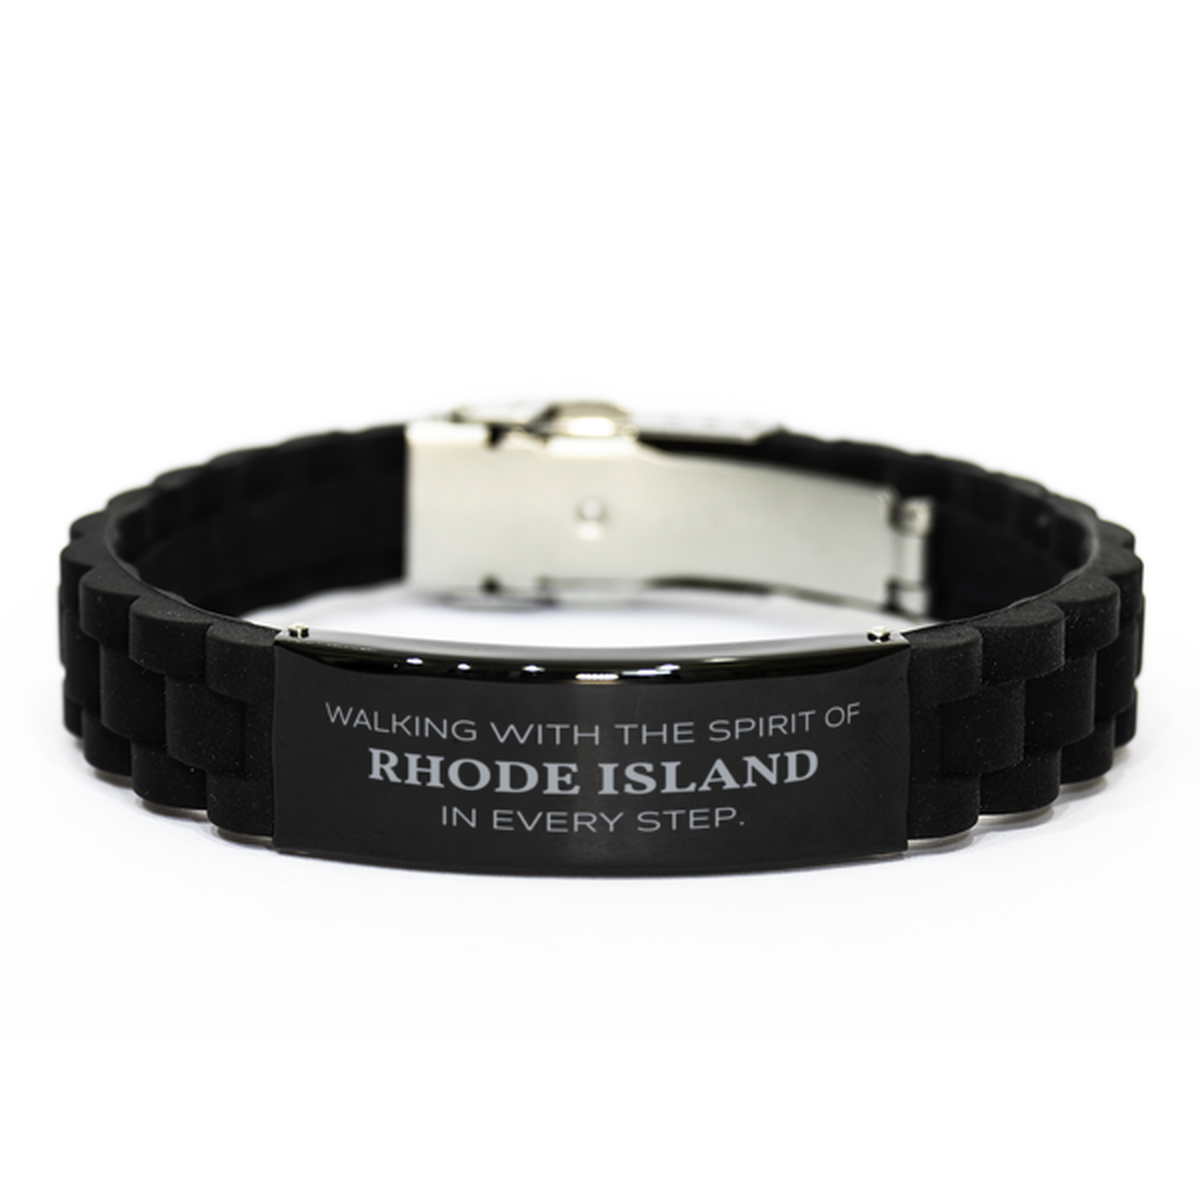 Rhode Island Gifts, Walking with the spirit, Love Rhode Island Birthday Christmas Black Glidelock Clasp Bracelet For Rhode Island People, Men, Women, Friends